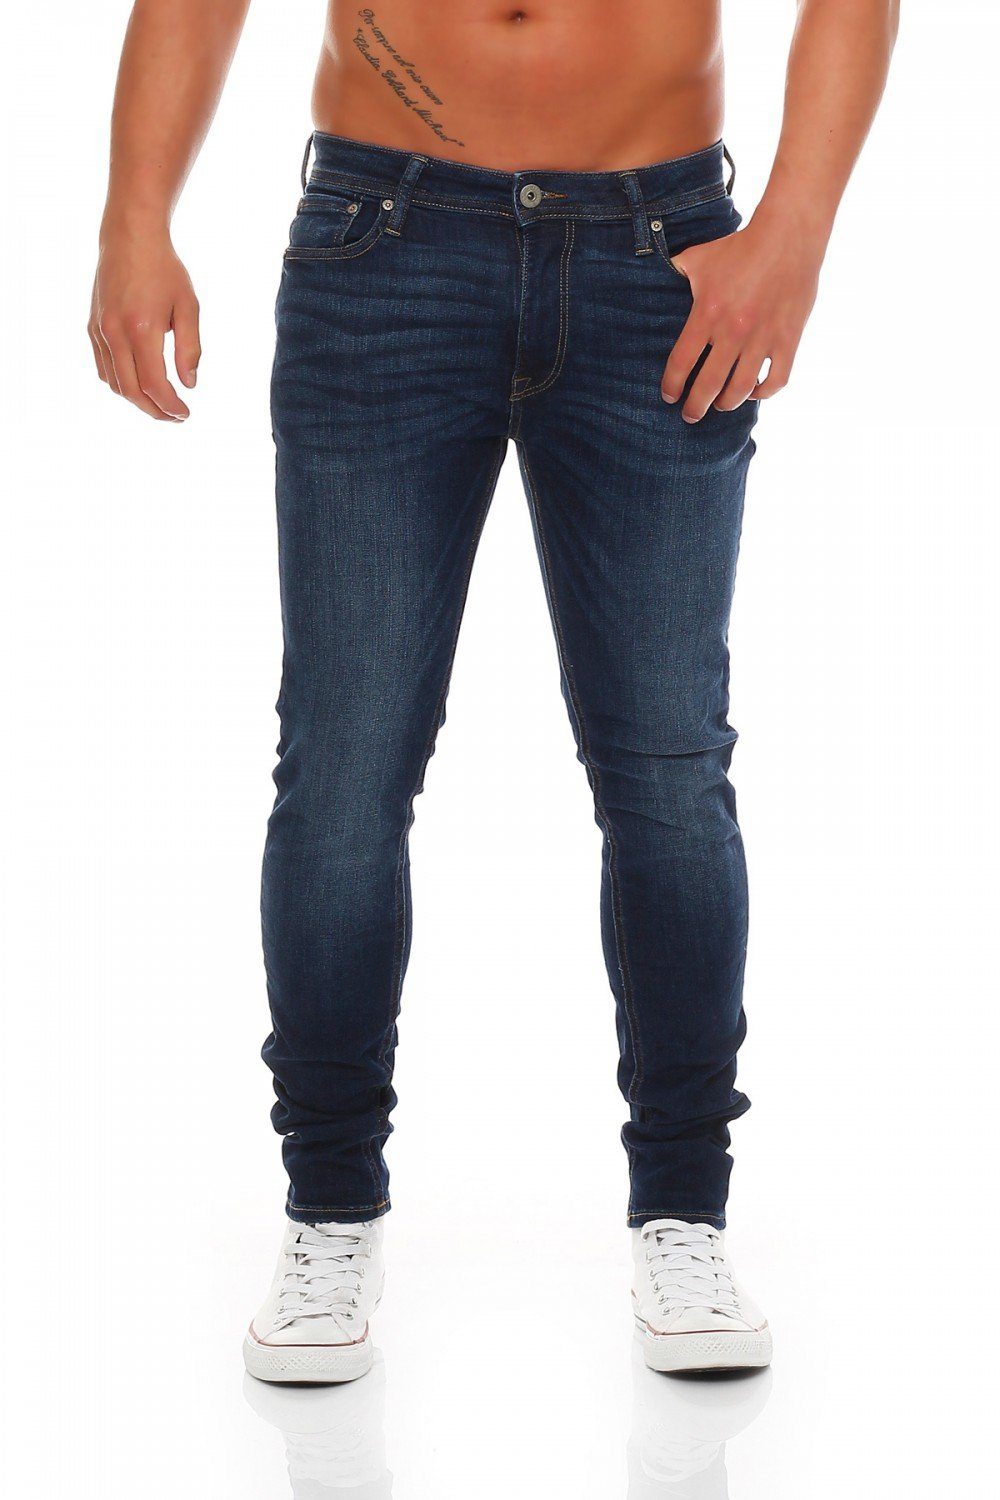 & Fit Skinny Herren AM014 Jack Jack Jeans Liam Skinny-fit-Jeans Original & Jones Jones